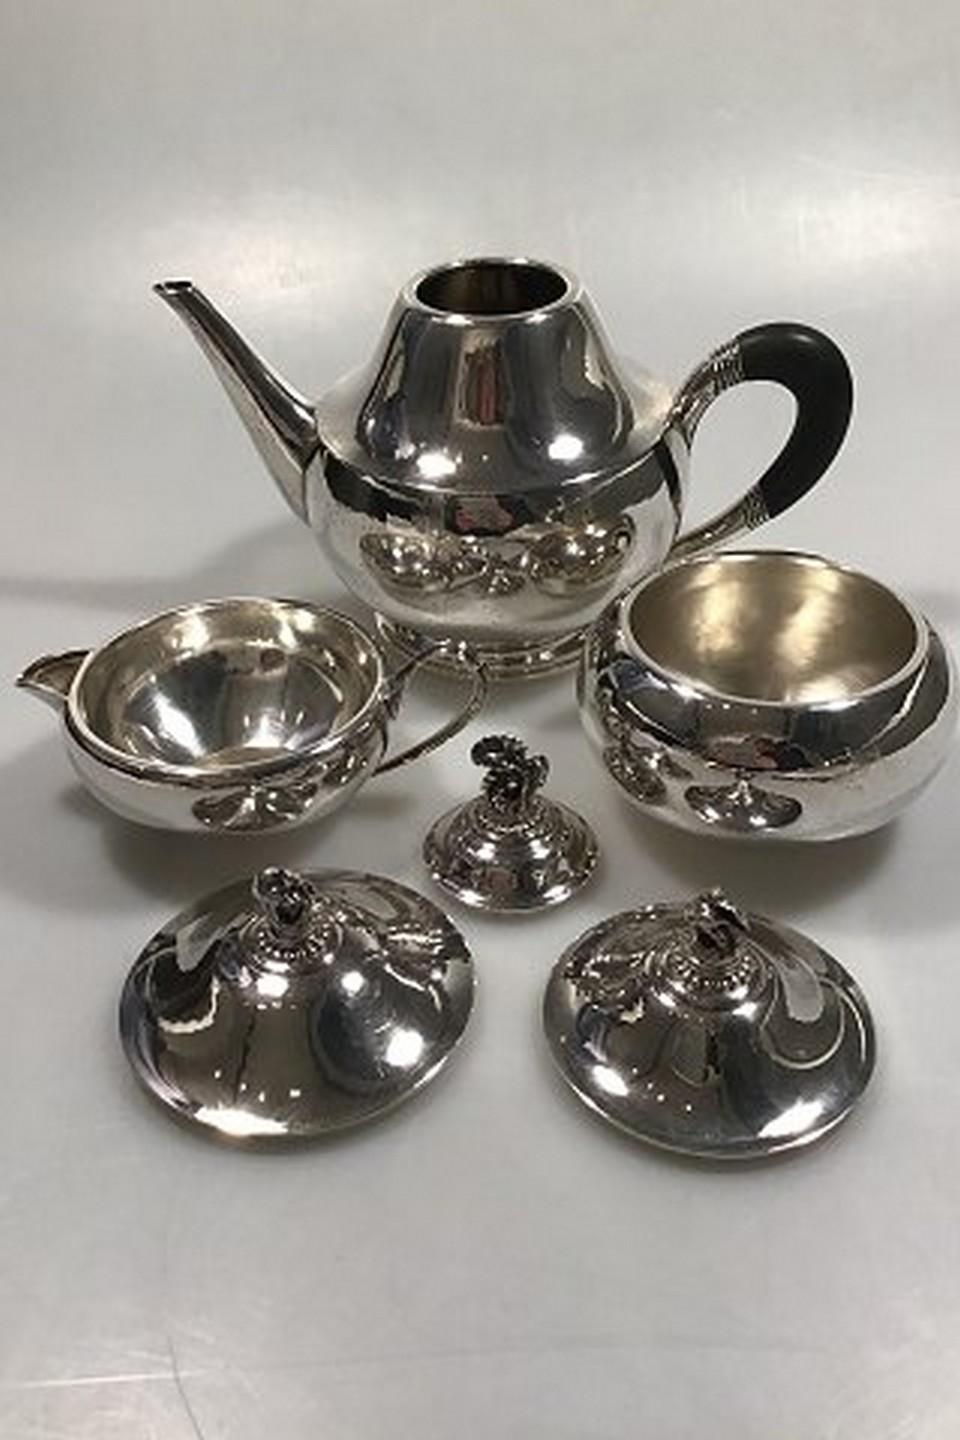 Georg Jensen sterling silver tea set no. 322, (1915-1933). Measures:
Tea pot H 17 cm (6 11/16 in) weight 500 gr/17.60 oz
Creamer H 8.5 cm (3 11/32 in) weight 194 gr/6.85 oz
Sugar bowl H 10.5 cm (4 9/64 in) weight 239 gr'78.45 oz (small